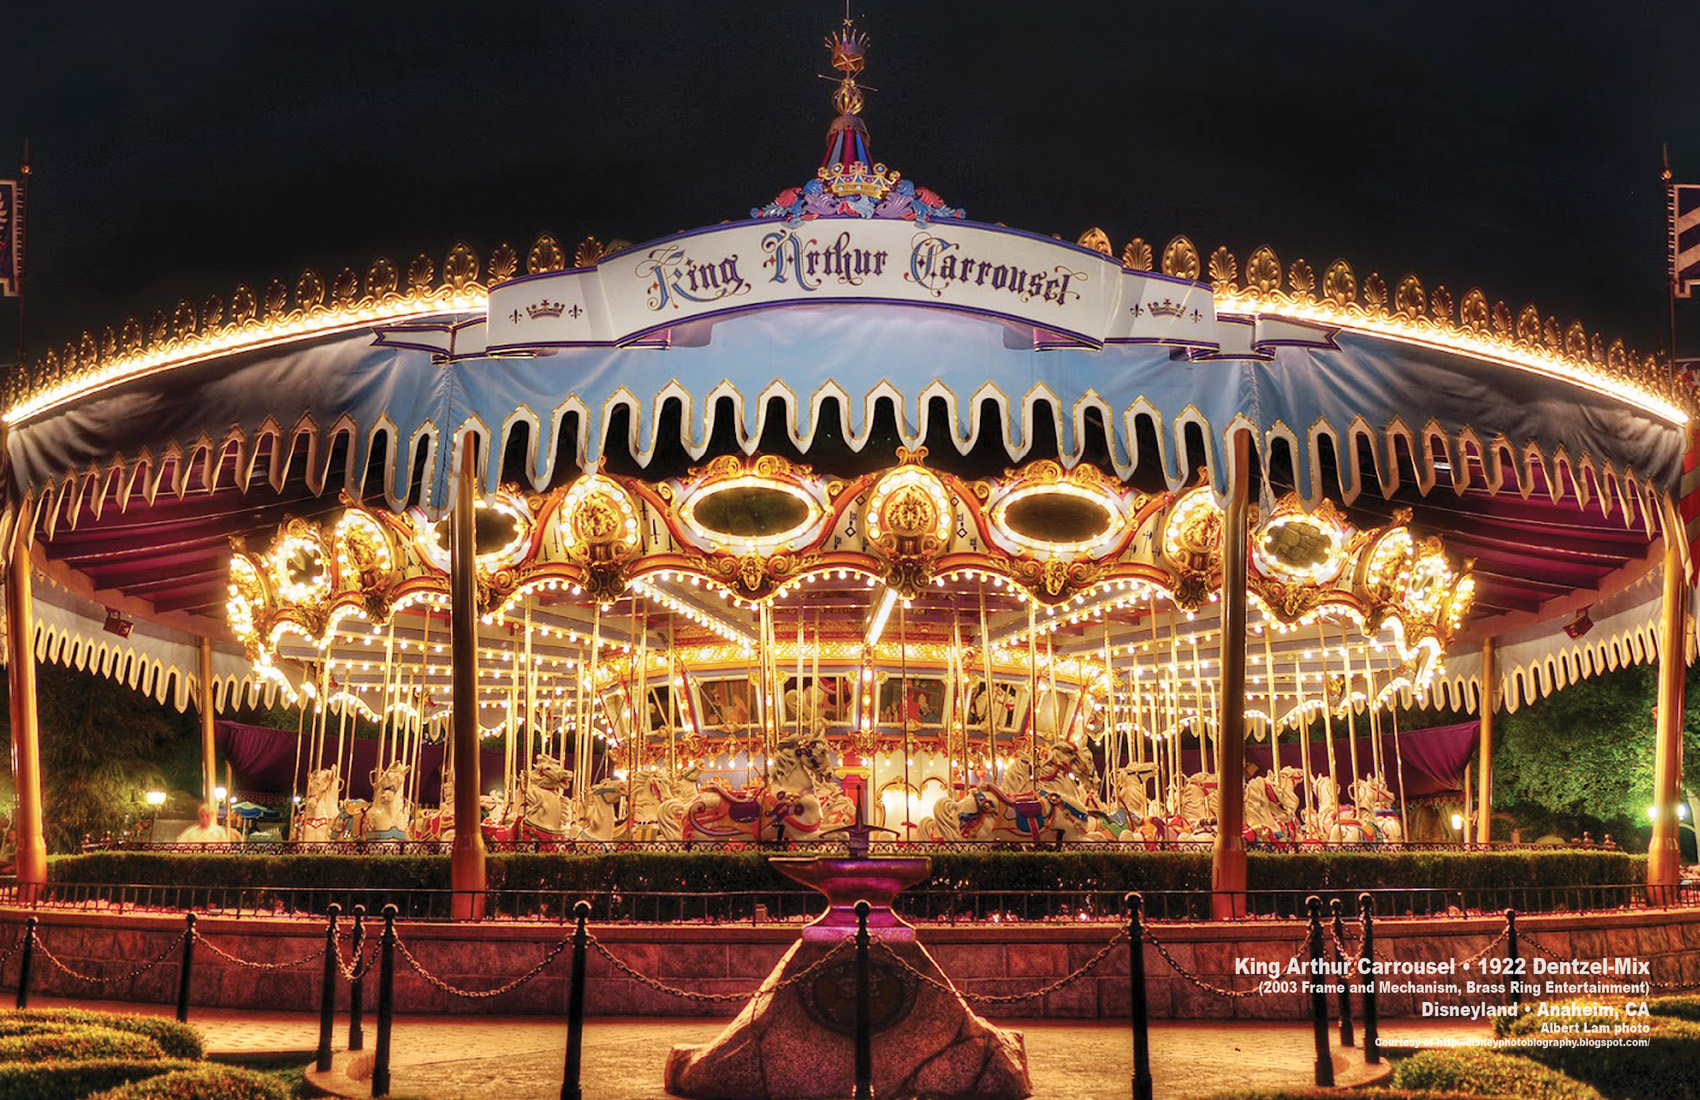 Disneyland-King-Arthur-Carousel-CNT-center-Nov-12